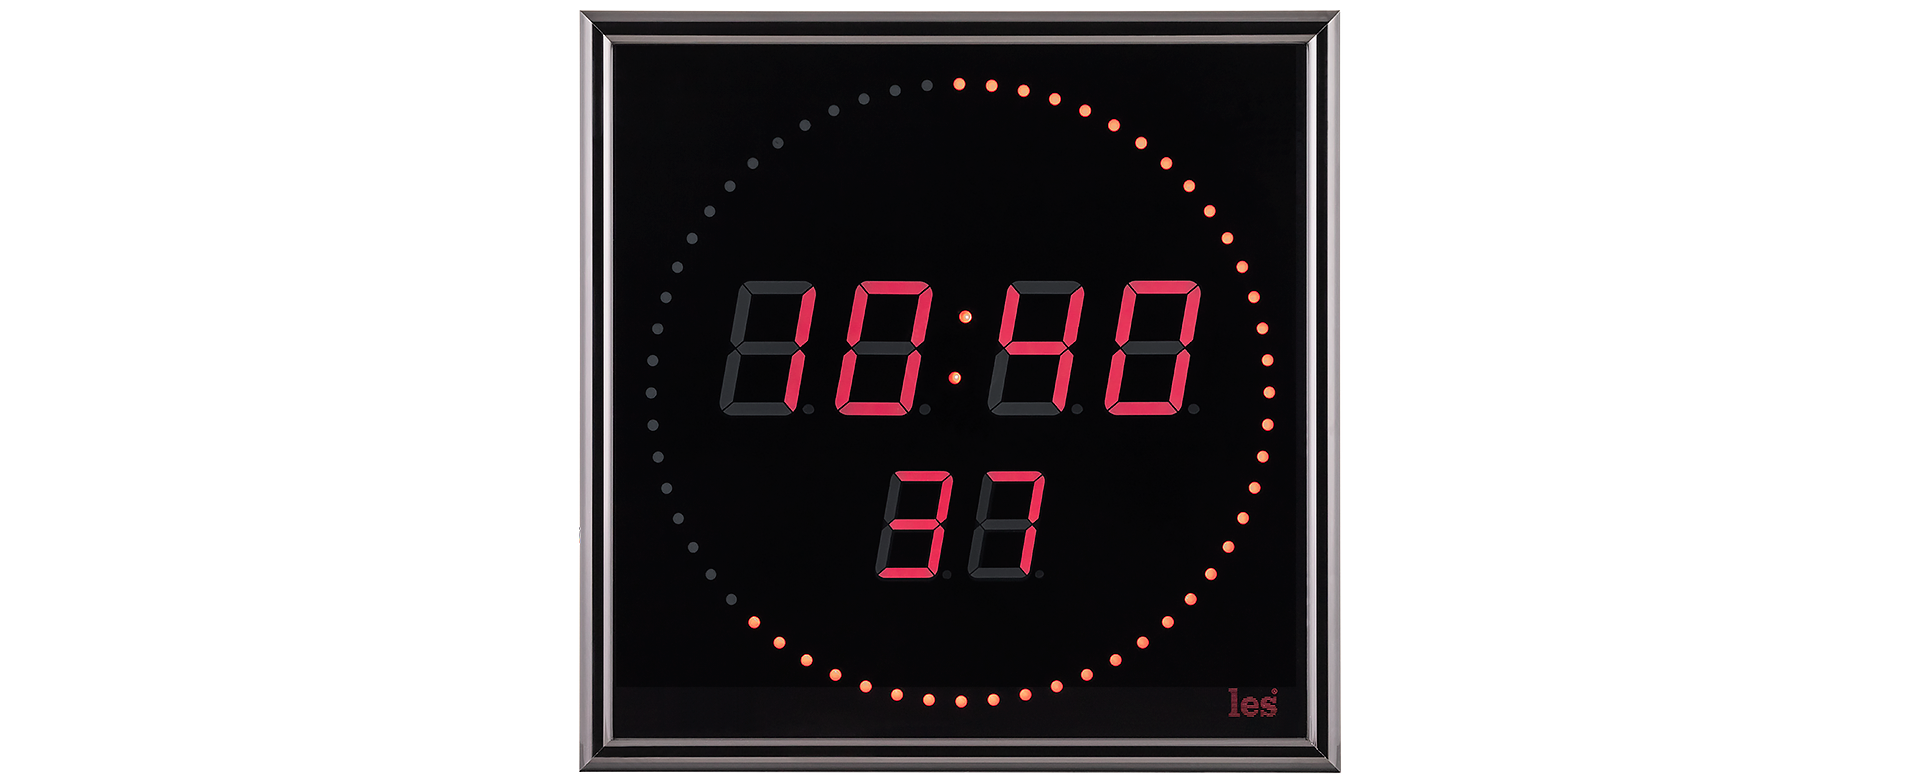 KU-94 панель индикации времени Les